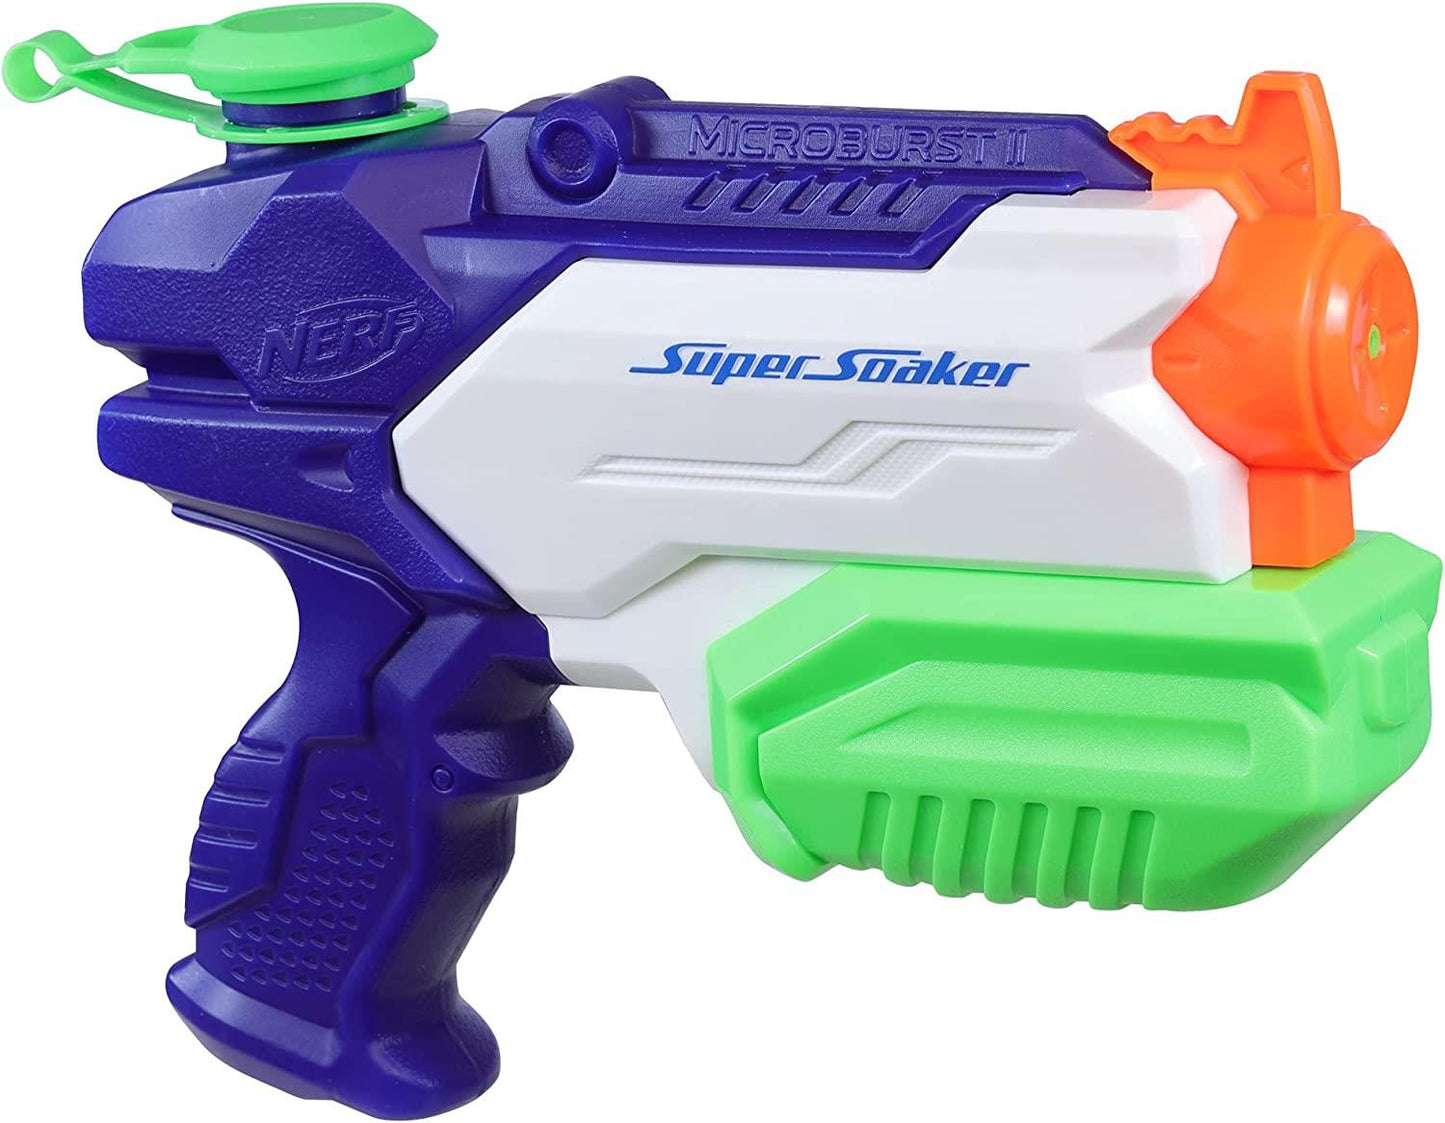 NERF Microburst 2 Water Blaster A9461 Super Soaker Toy Gun